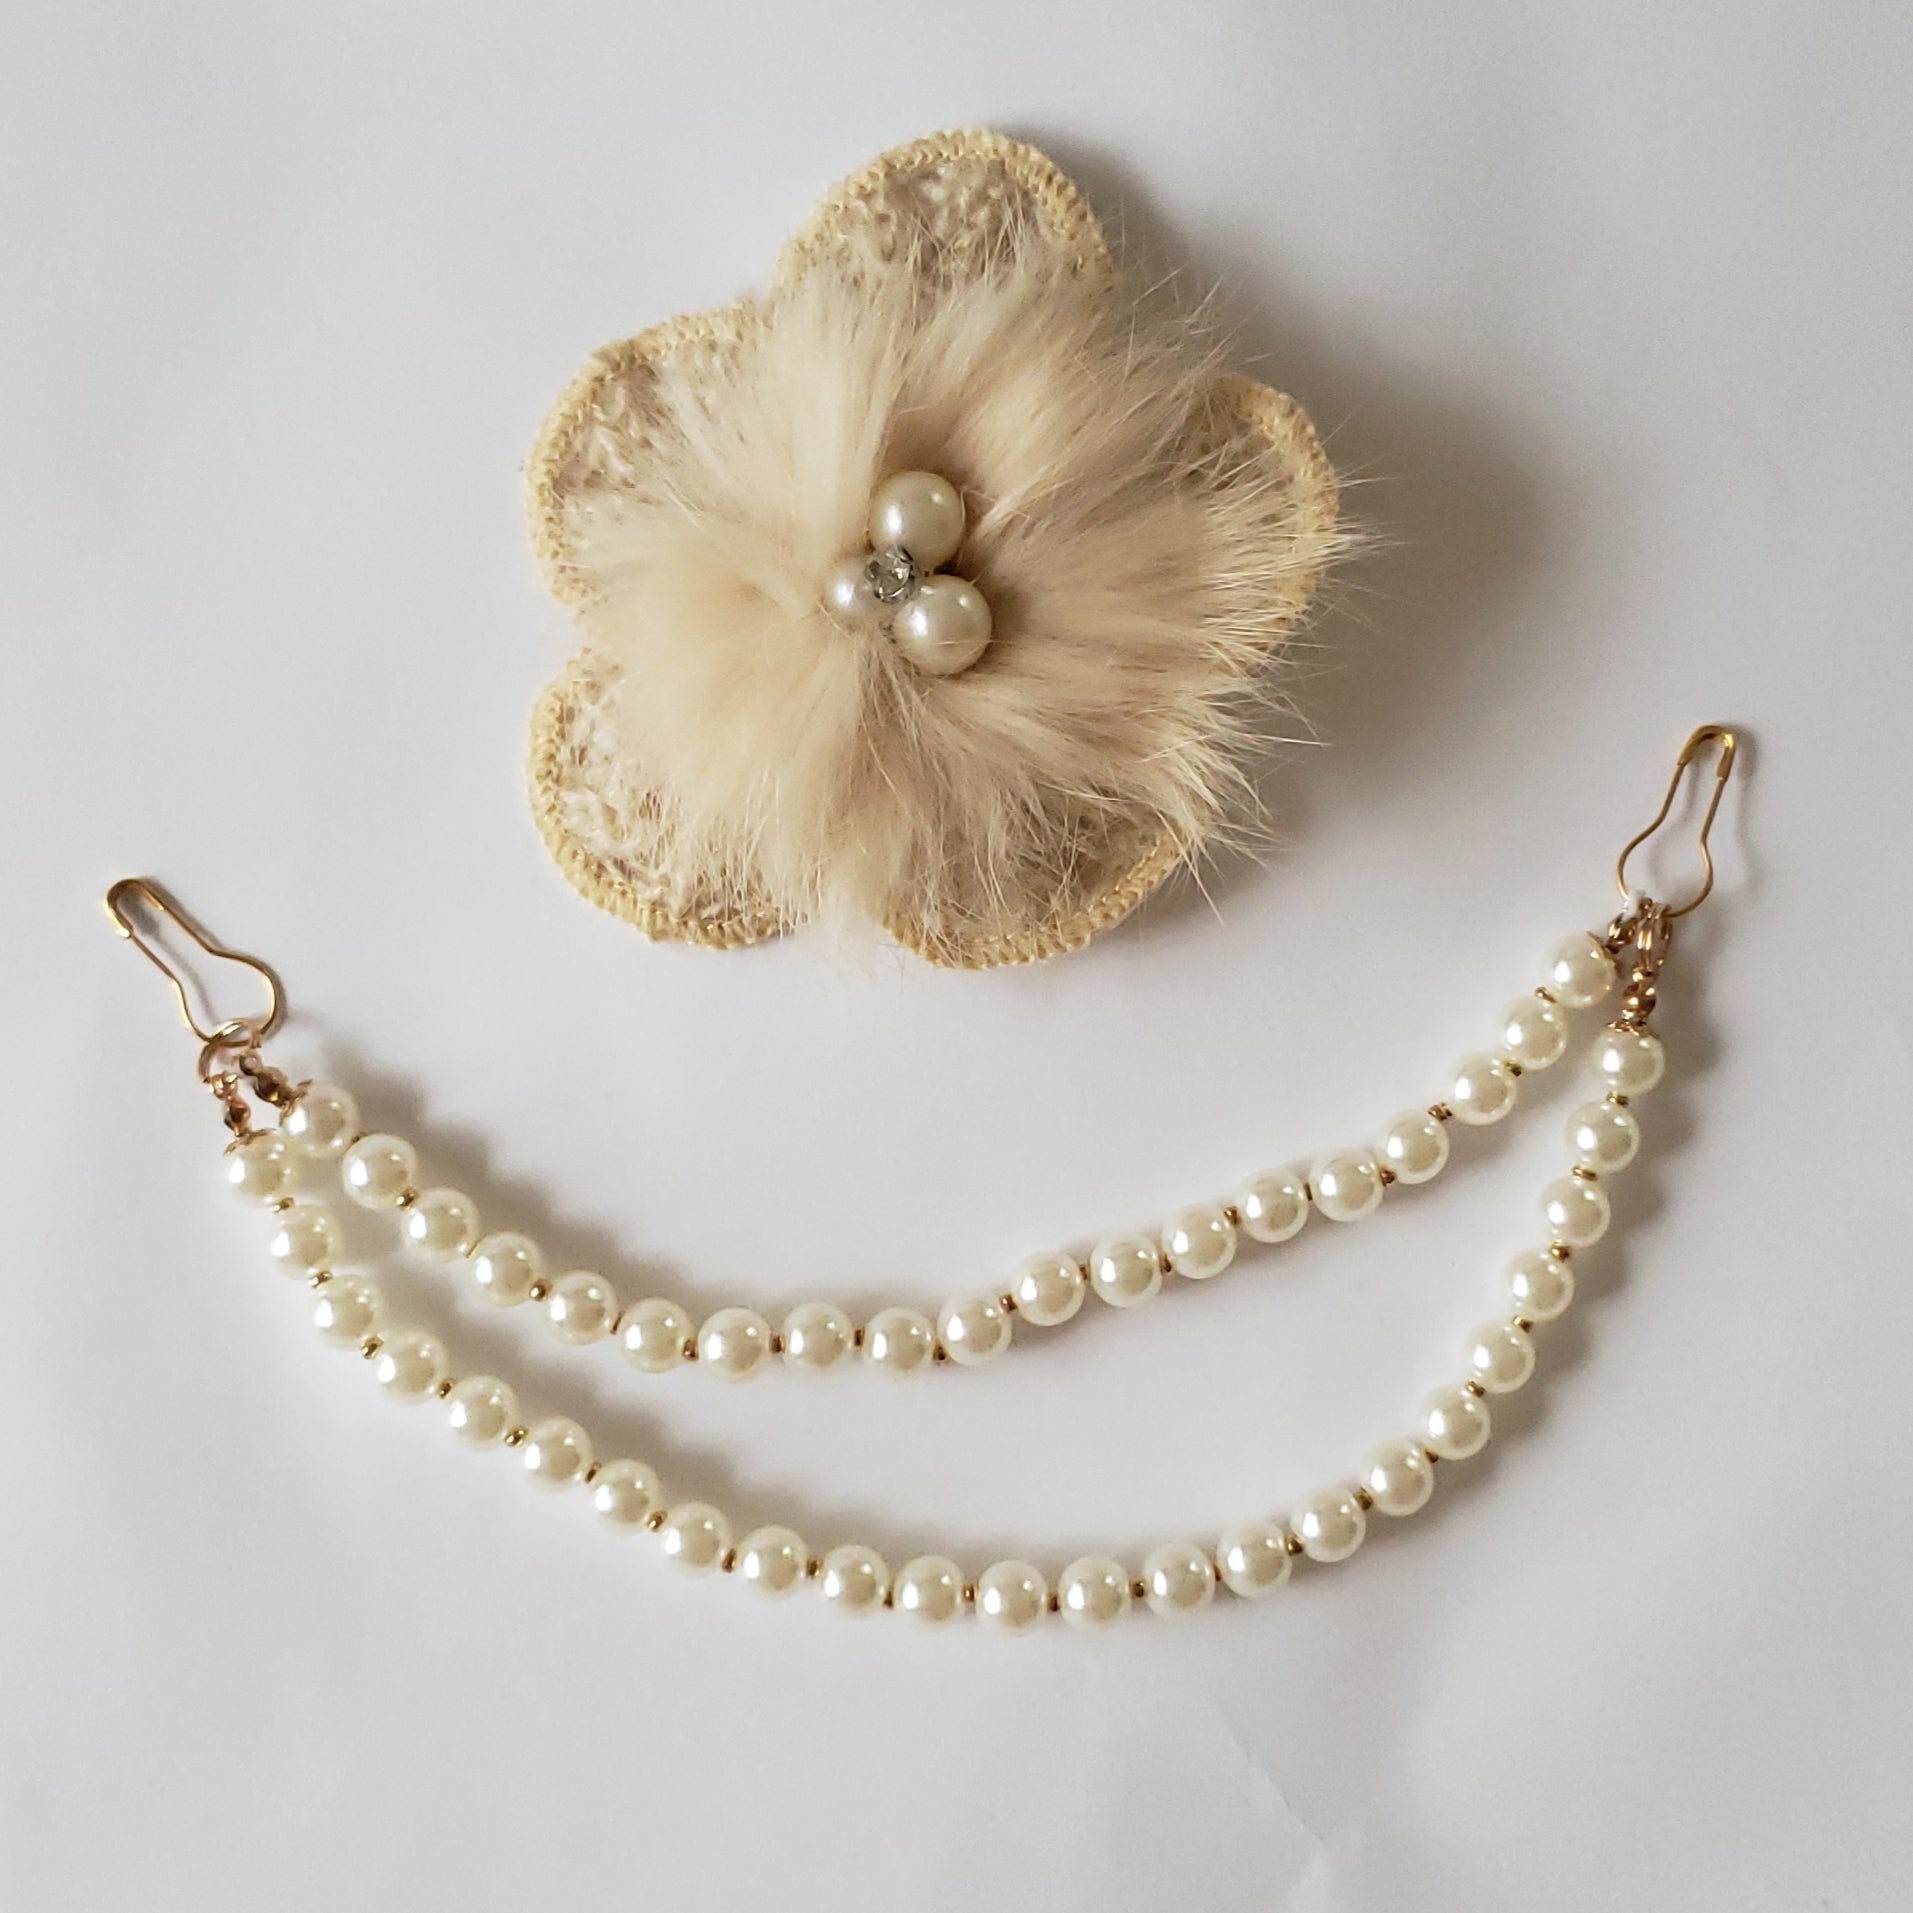 Necklaces, Flowers, & Bow ties - Hilwah 